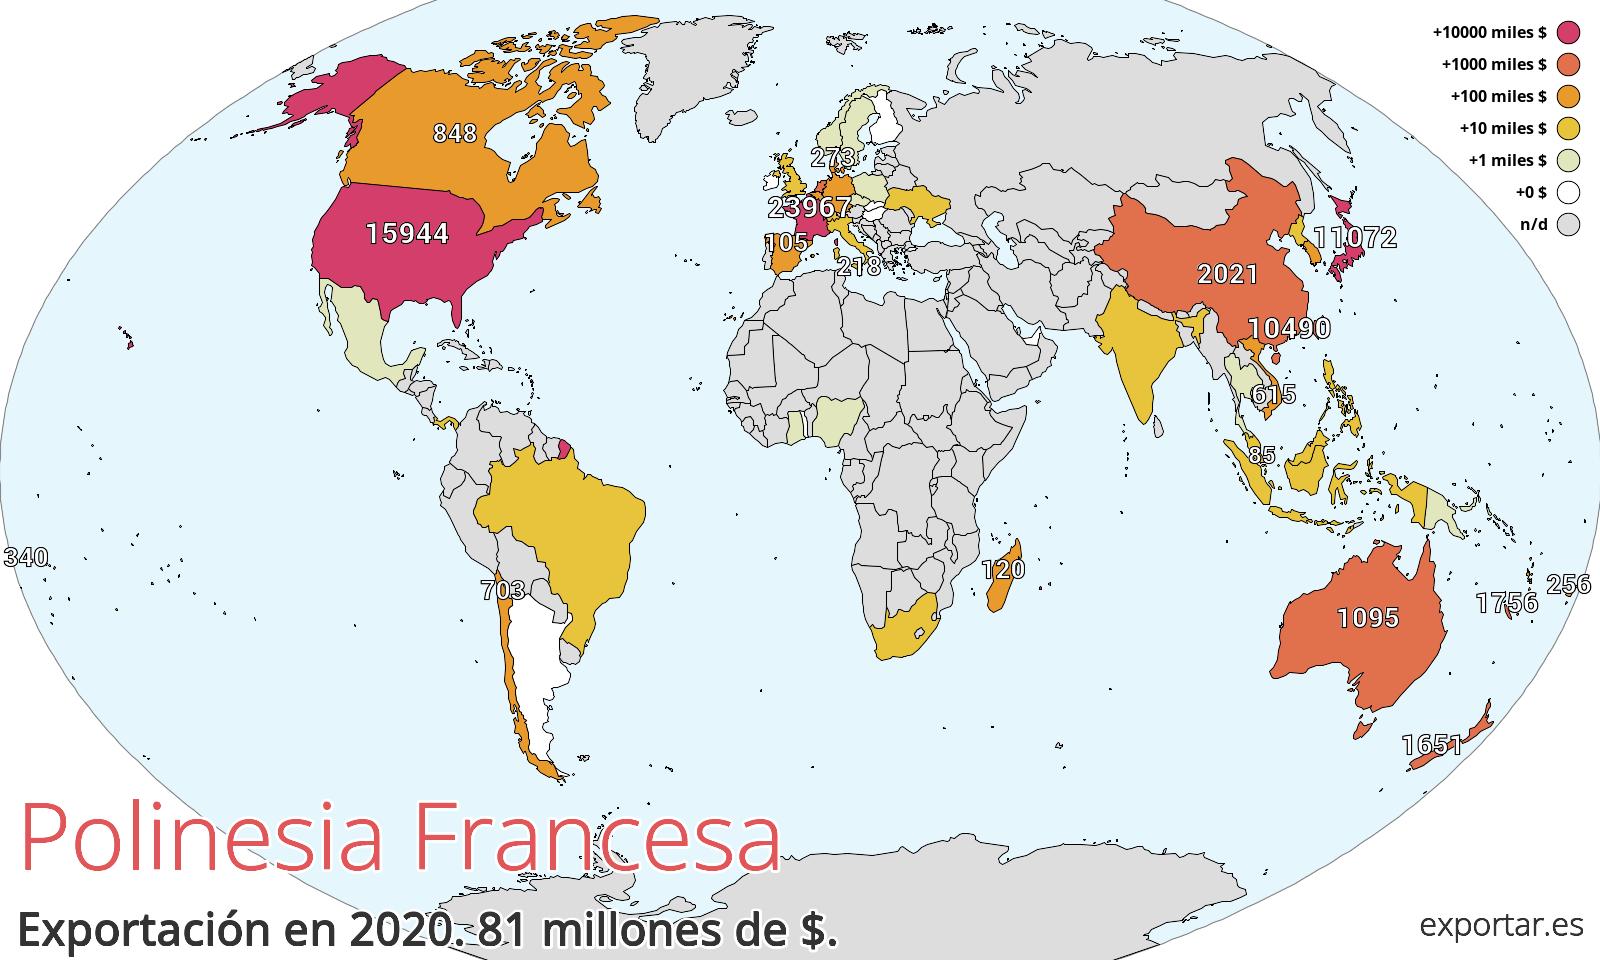 Mapa de exportación de Polinesia Francesa en 2020.